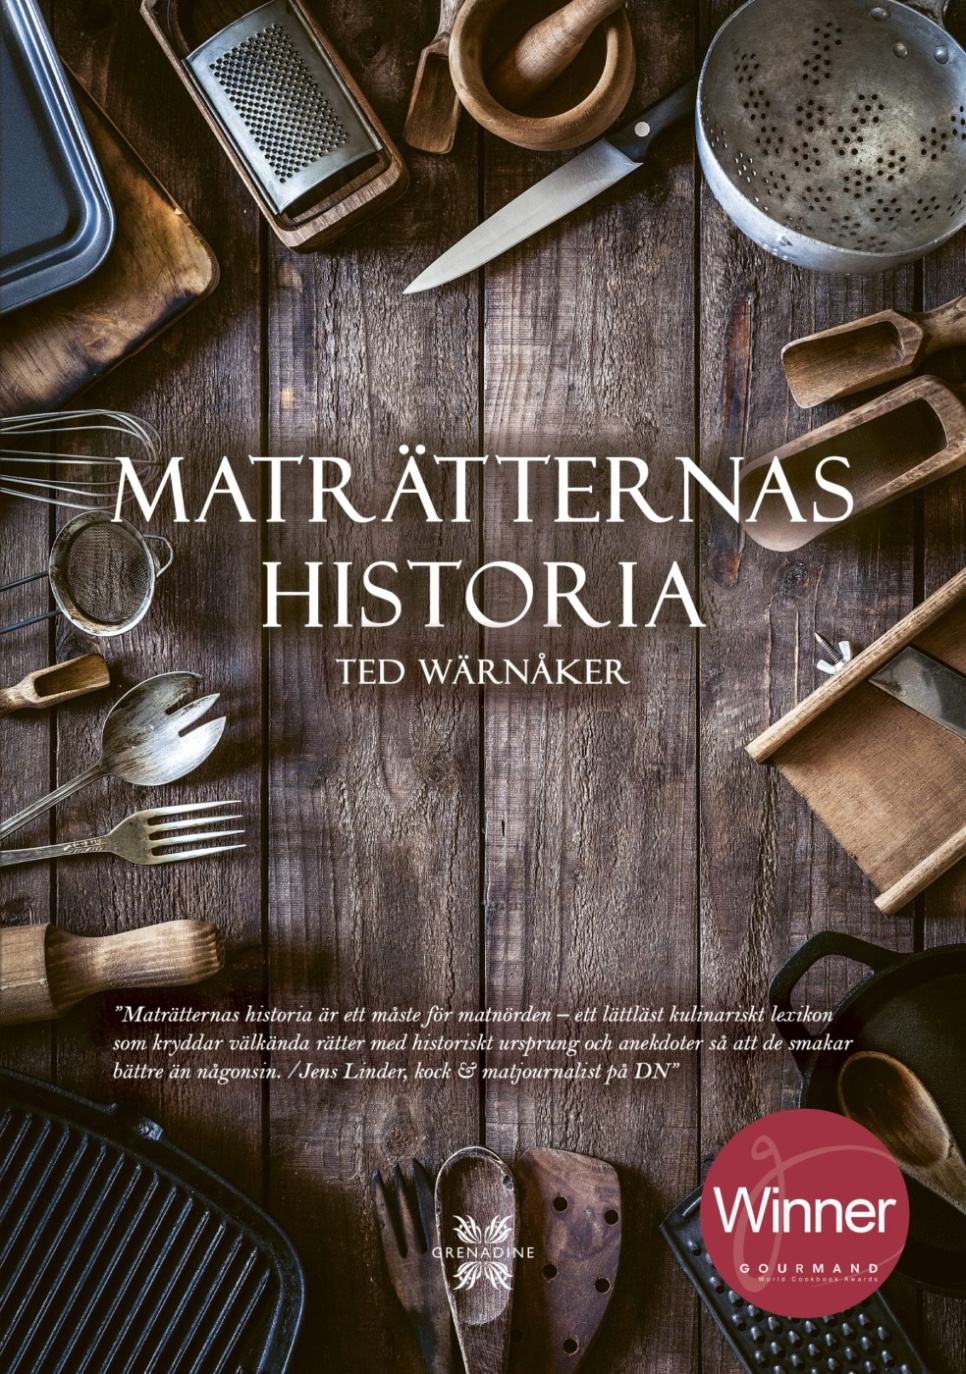 Maträtternas historia - Ted Wärnåker in the group Cooking / Cookbooks / Other cookbooks at KitchenLab (1355-23680)